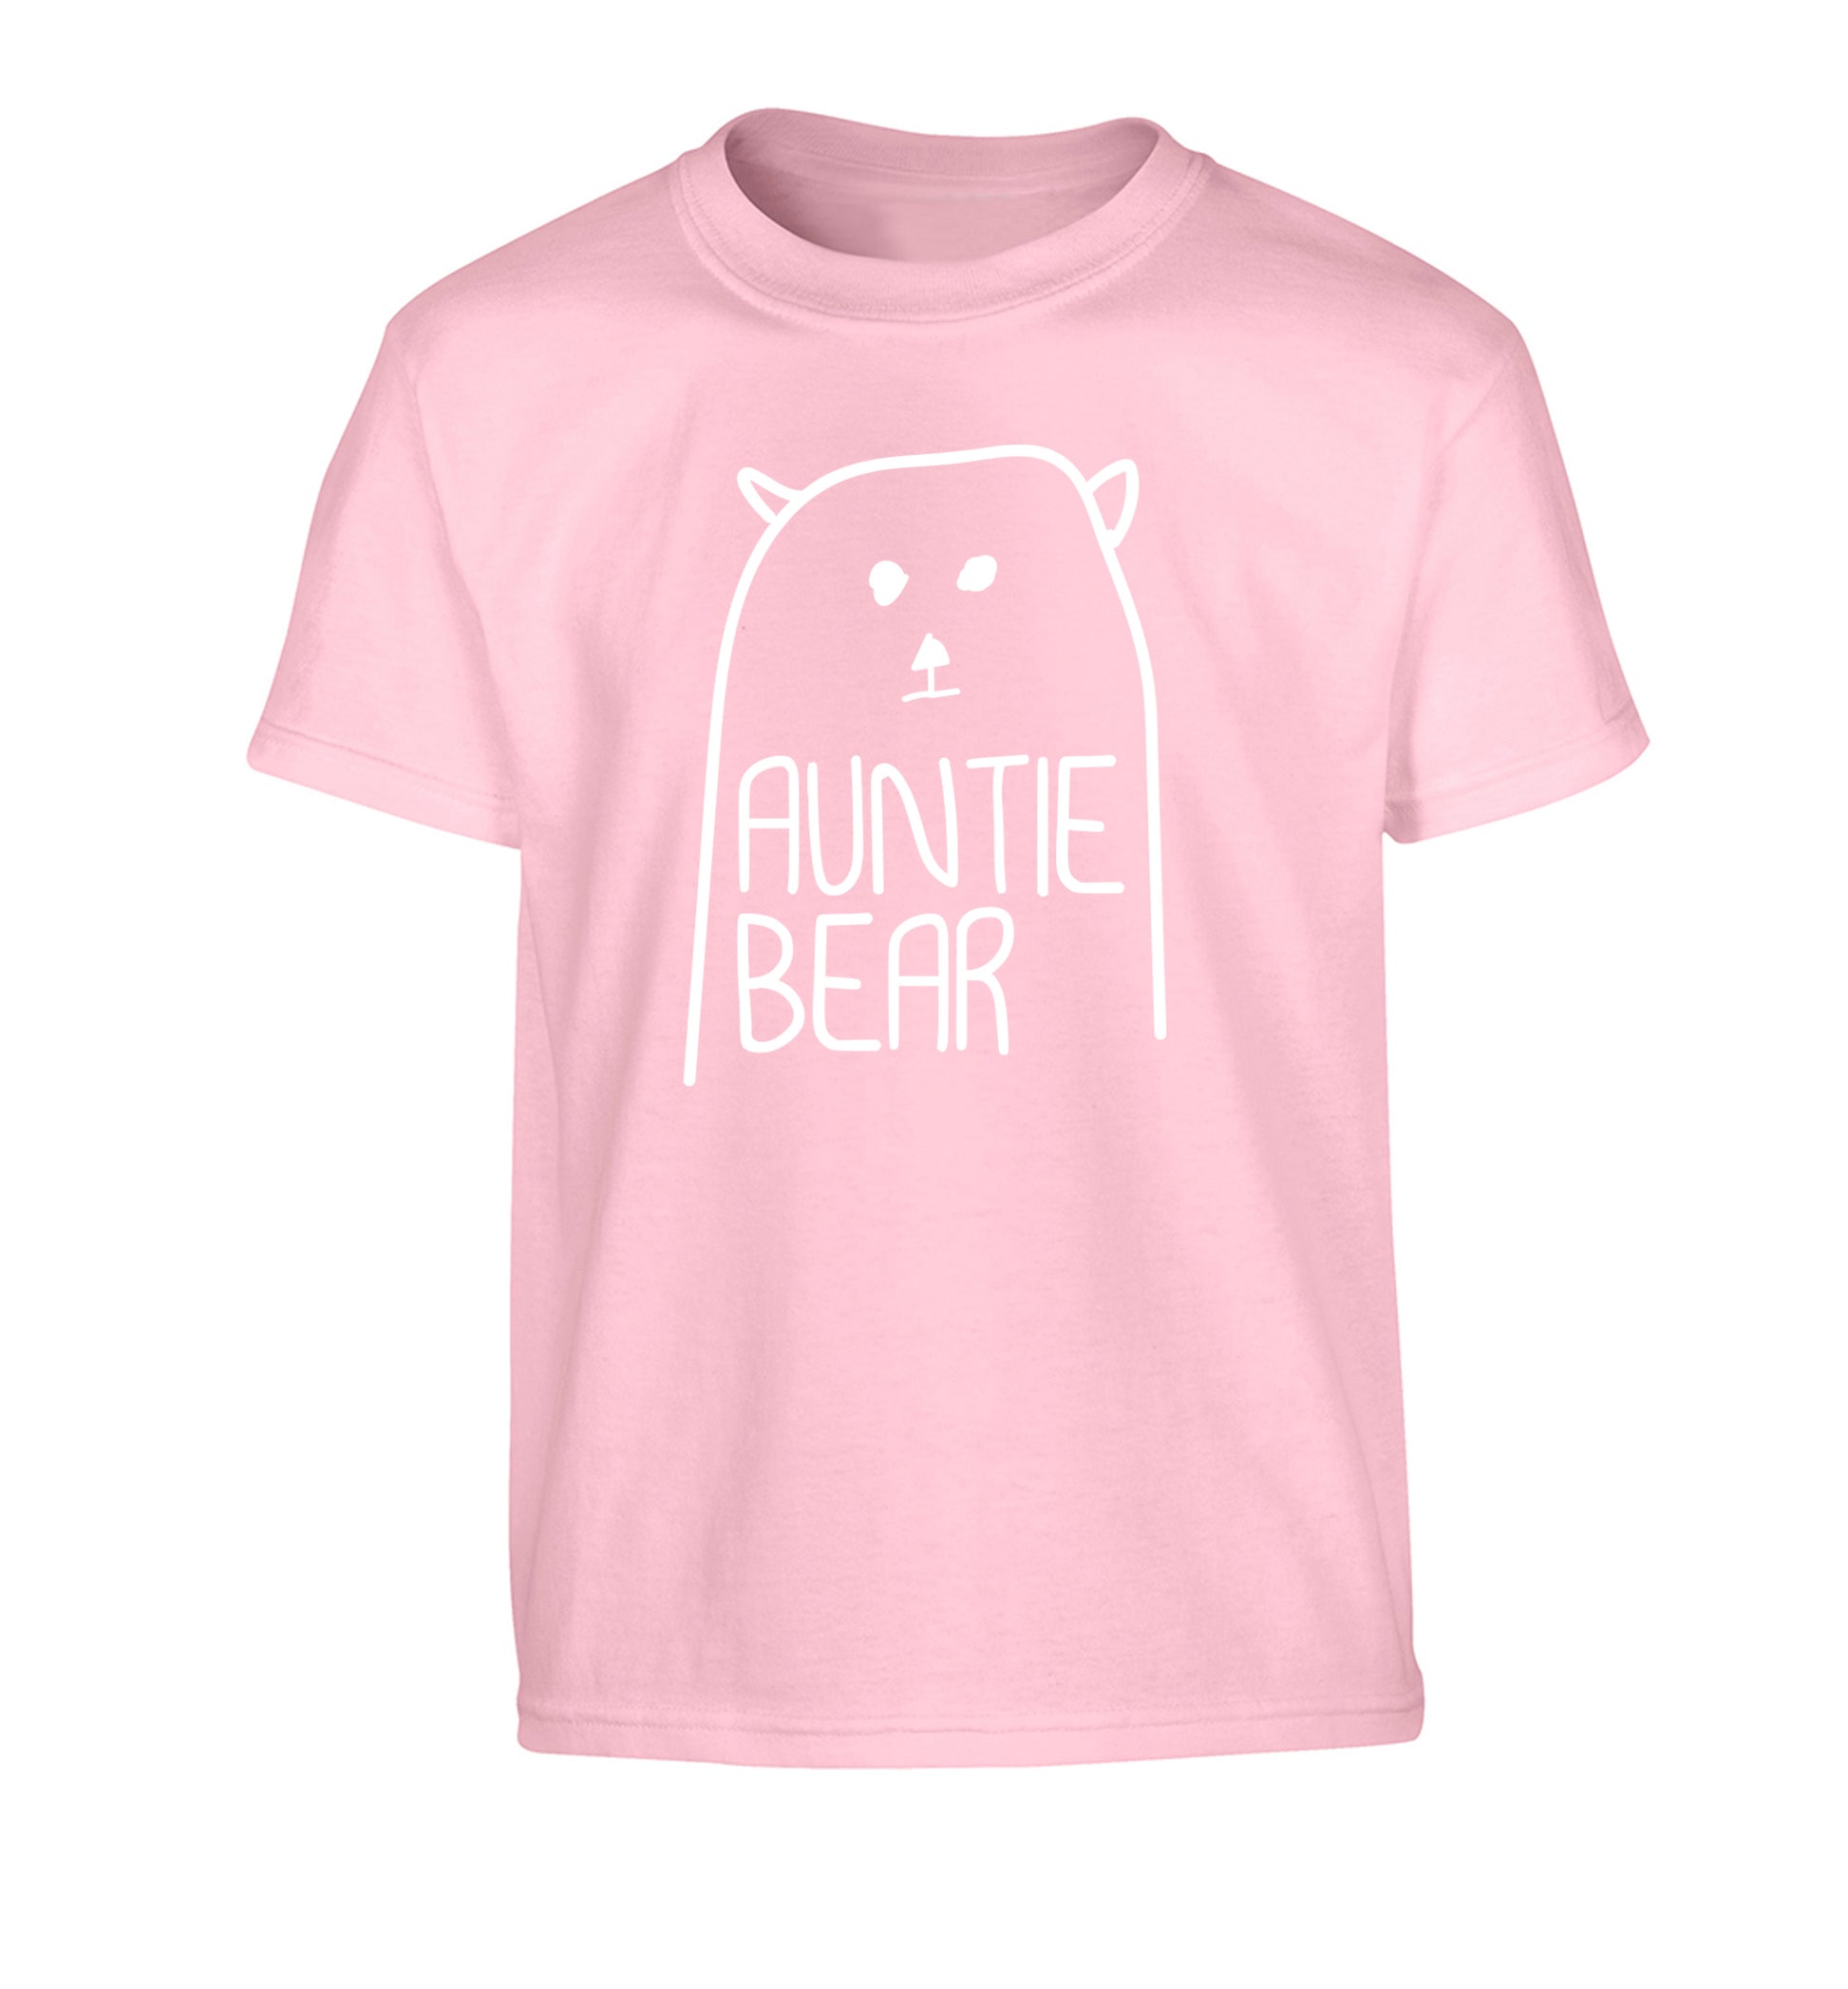 Auntie bear Children's light pink Tshirt 12-13 Years